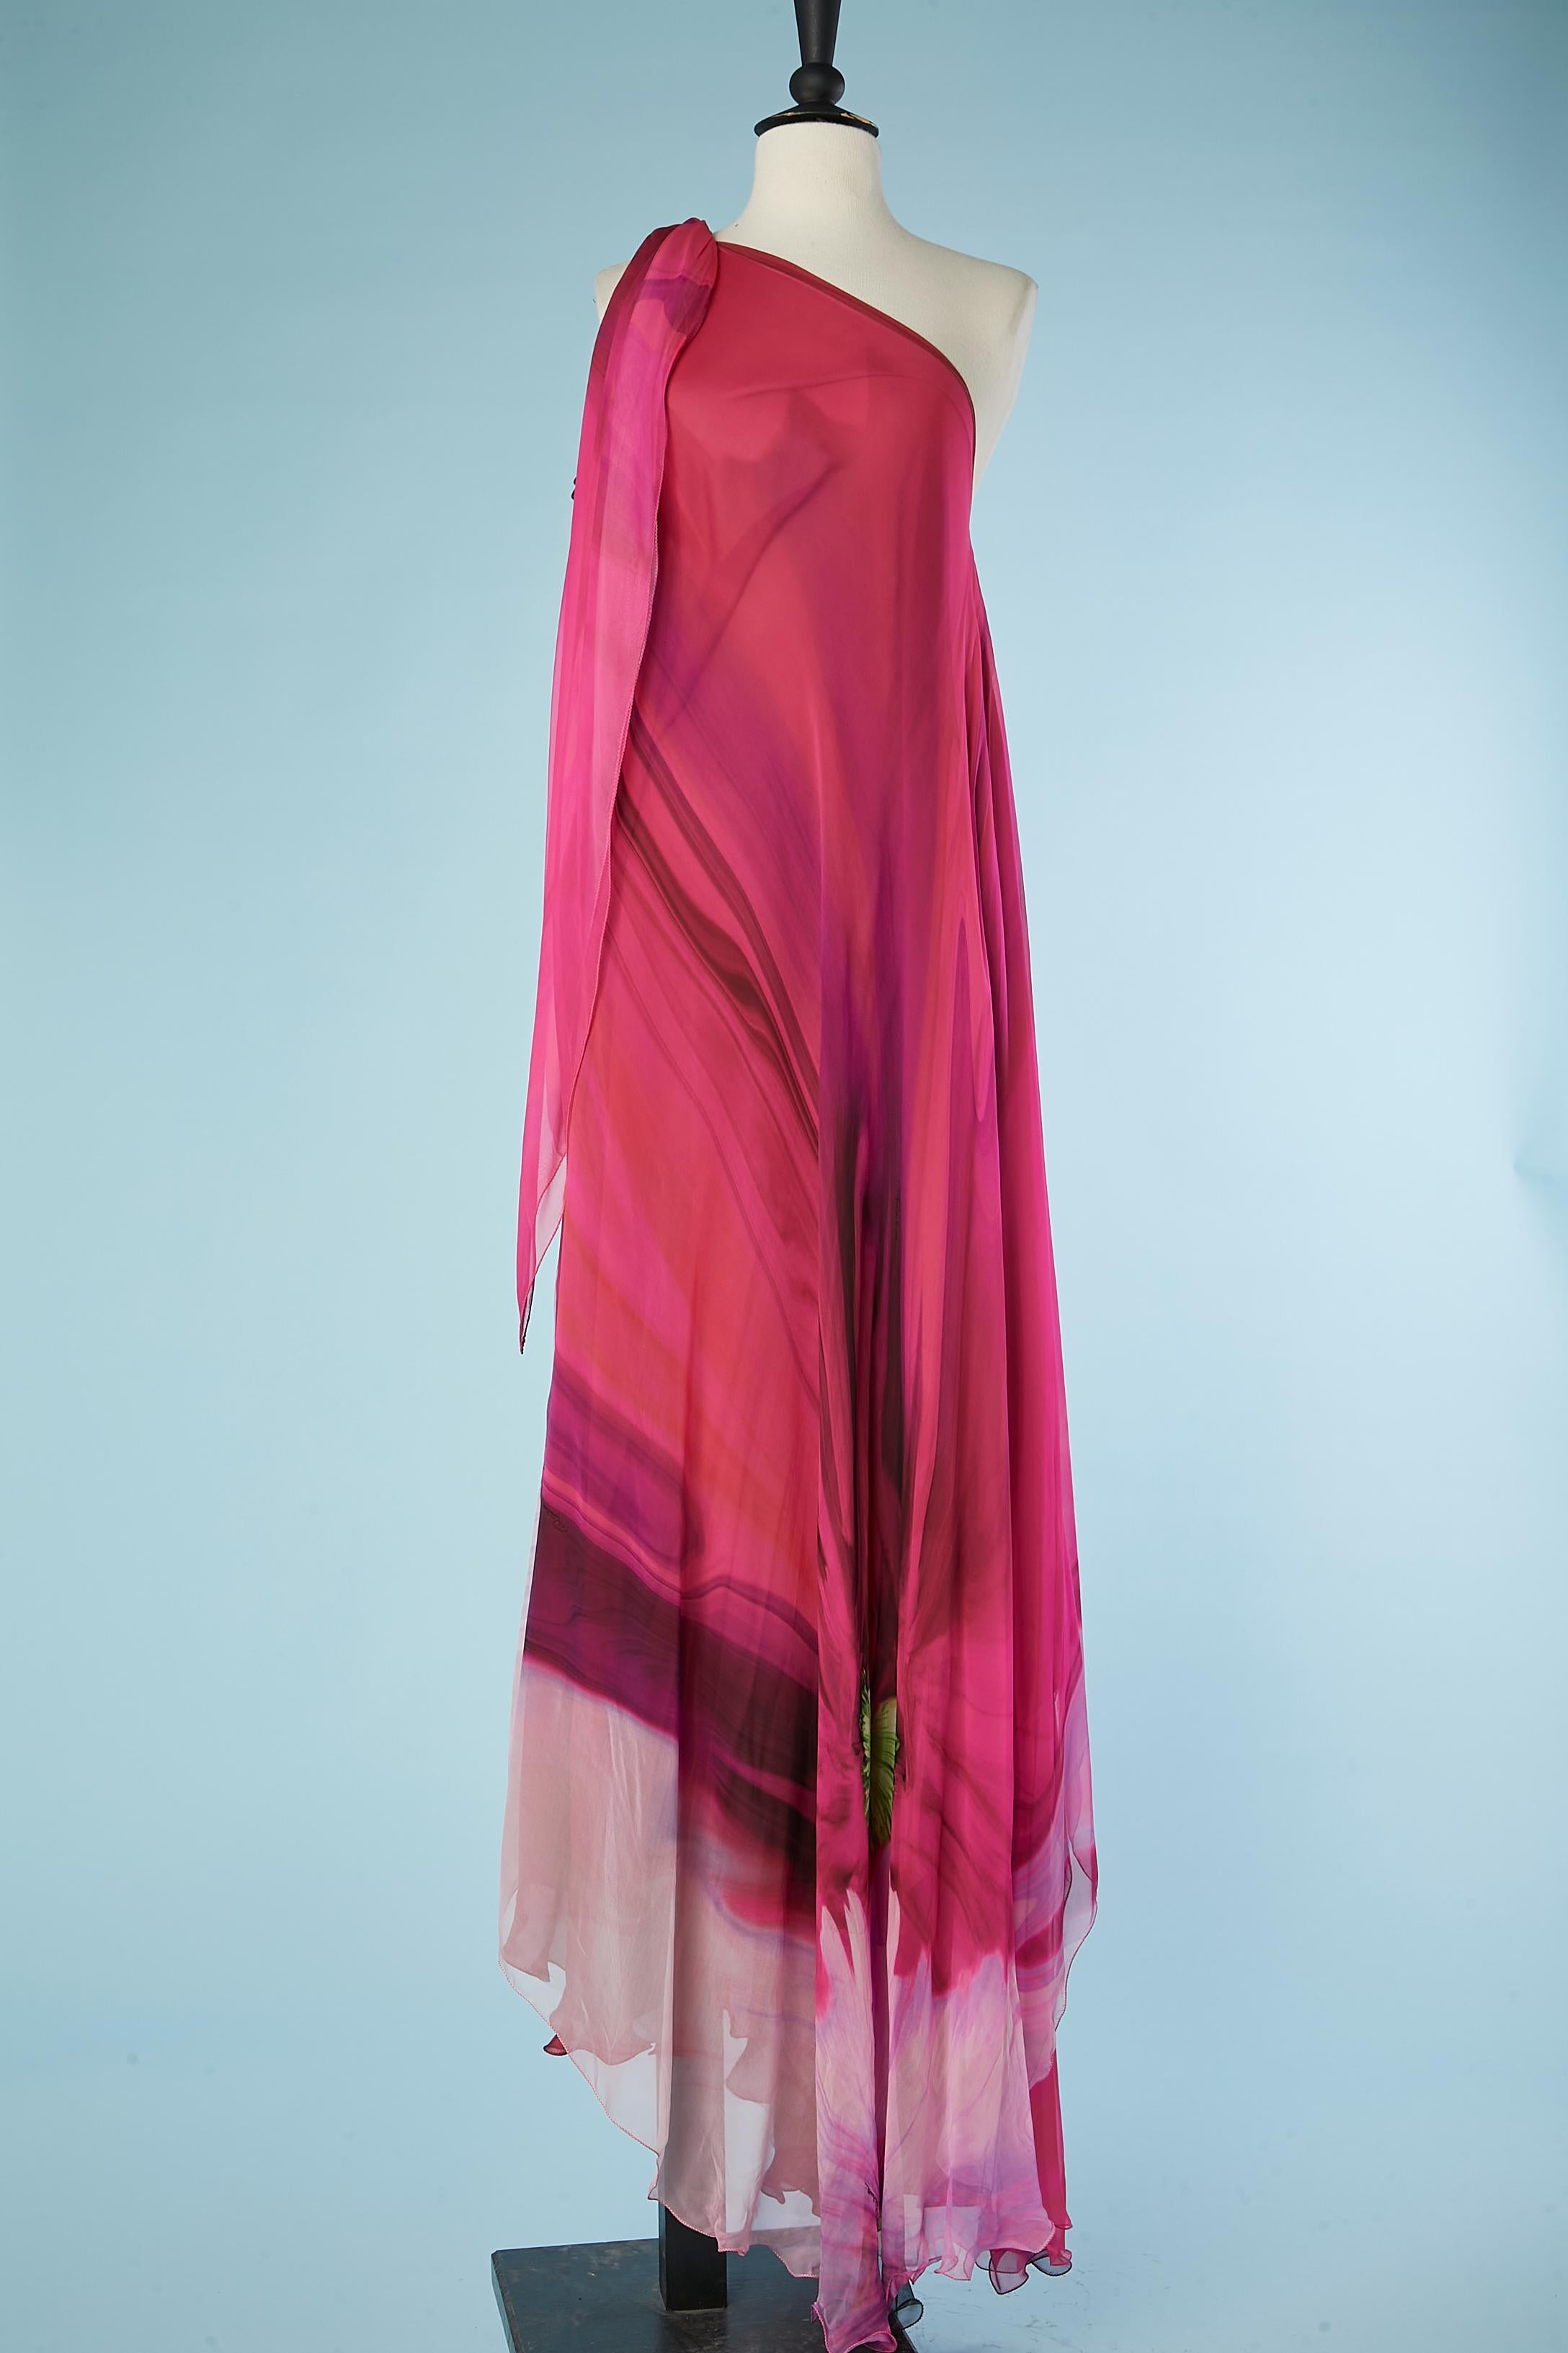 Printed silk chiffon asymmetrical evening dress. Fabric composition: Silk chiffon and silk lining. Shoulder strands. Biais. Authenticity hologram.Silk chiffon shoulder strands.
SIZE 40 (It) 